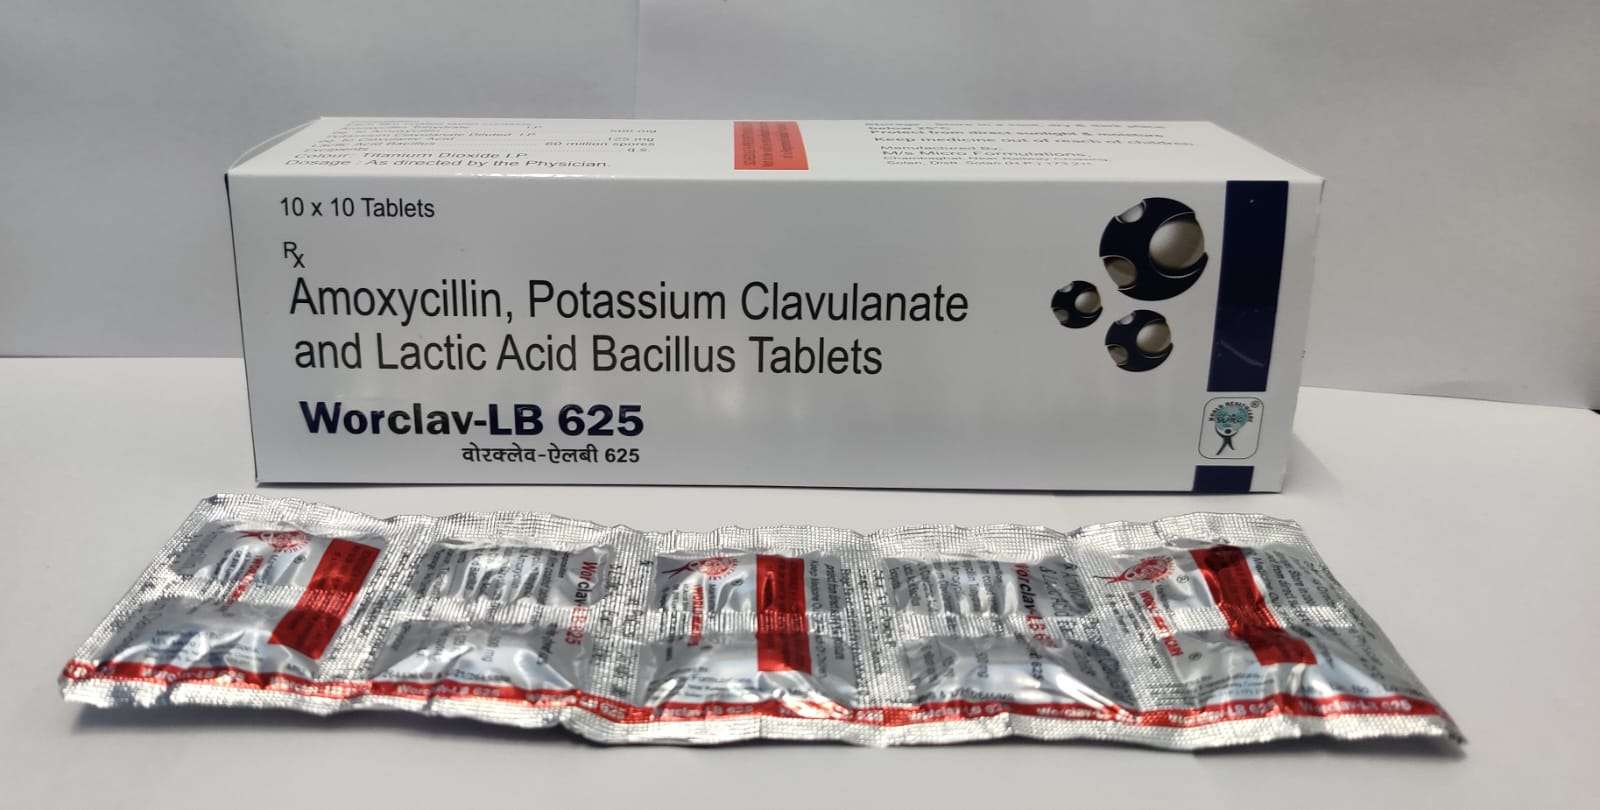 amoxycillin 500mg + clavulanic acid 125mg +lactic acid bacillus